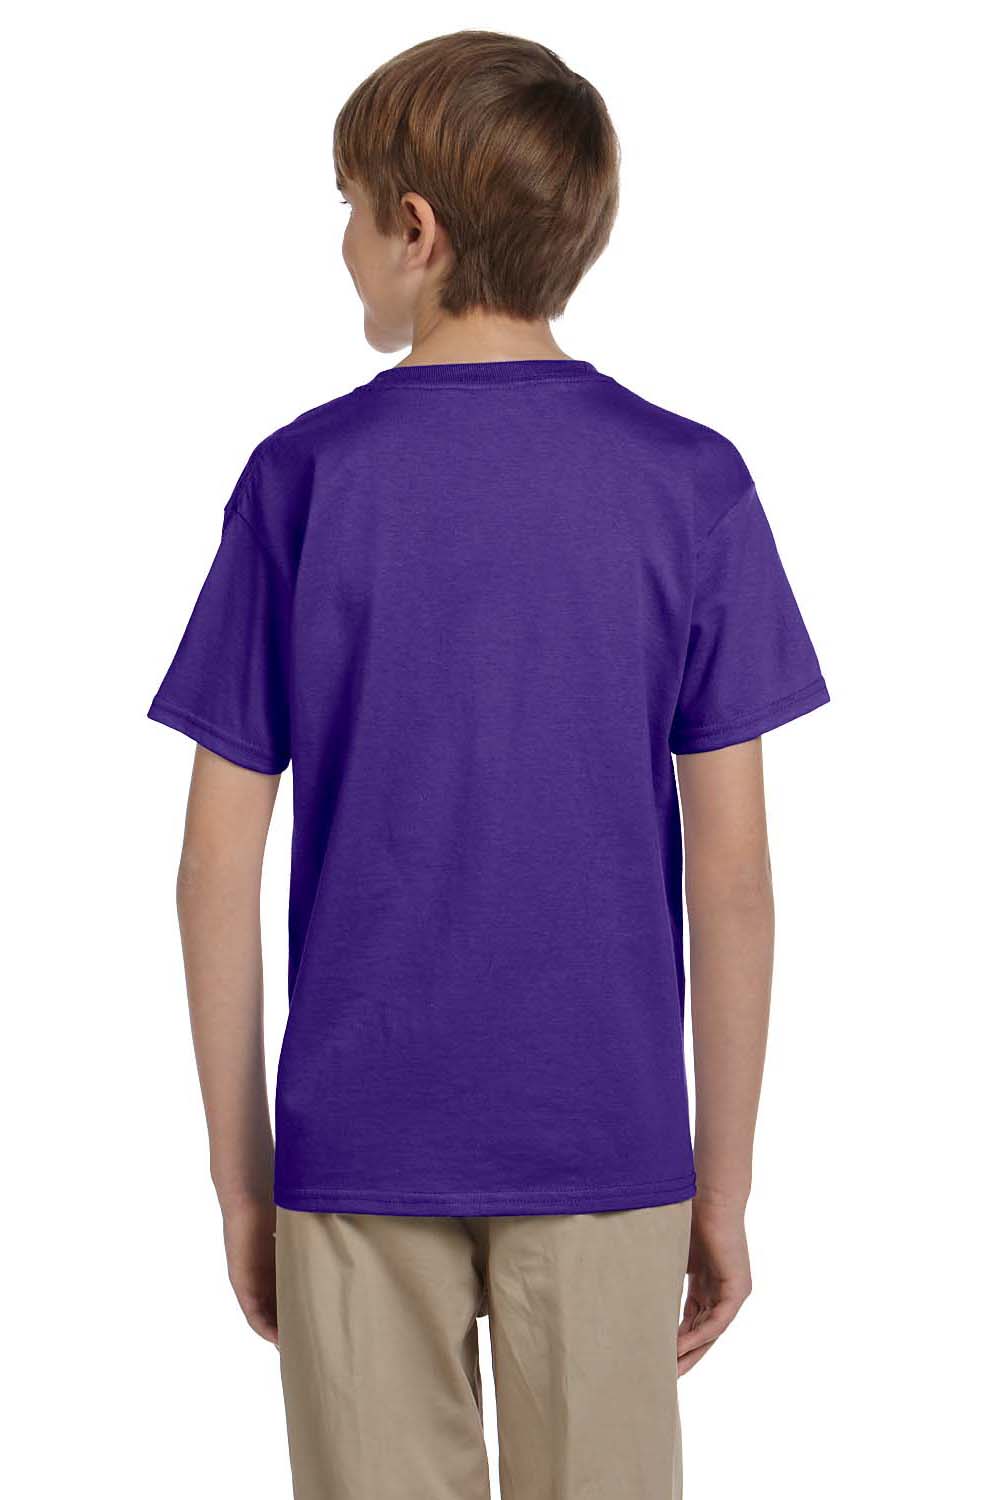 Hanes 5370 Youth EcoSmart Short Sleeve Crewneck T-Shirt Purple Back